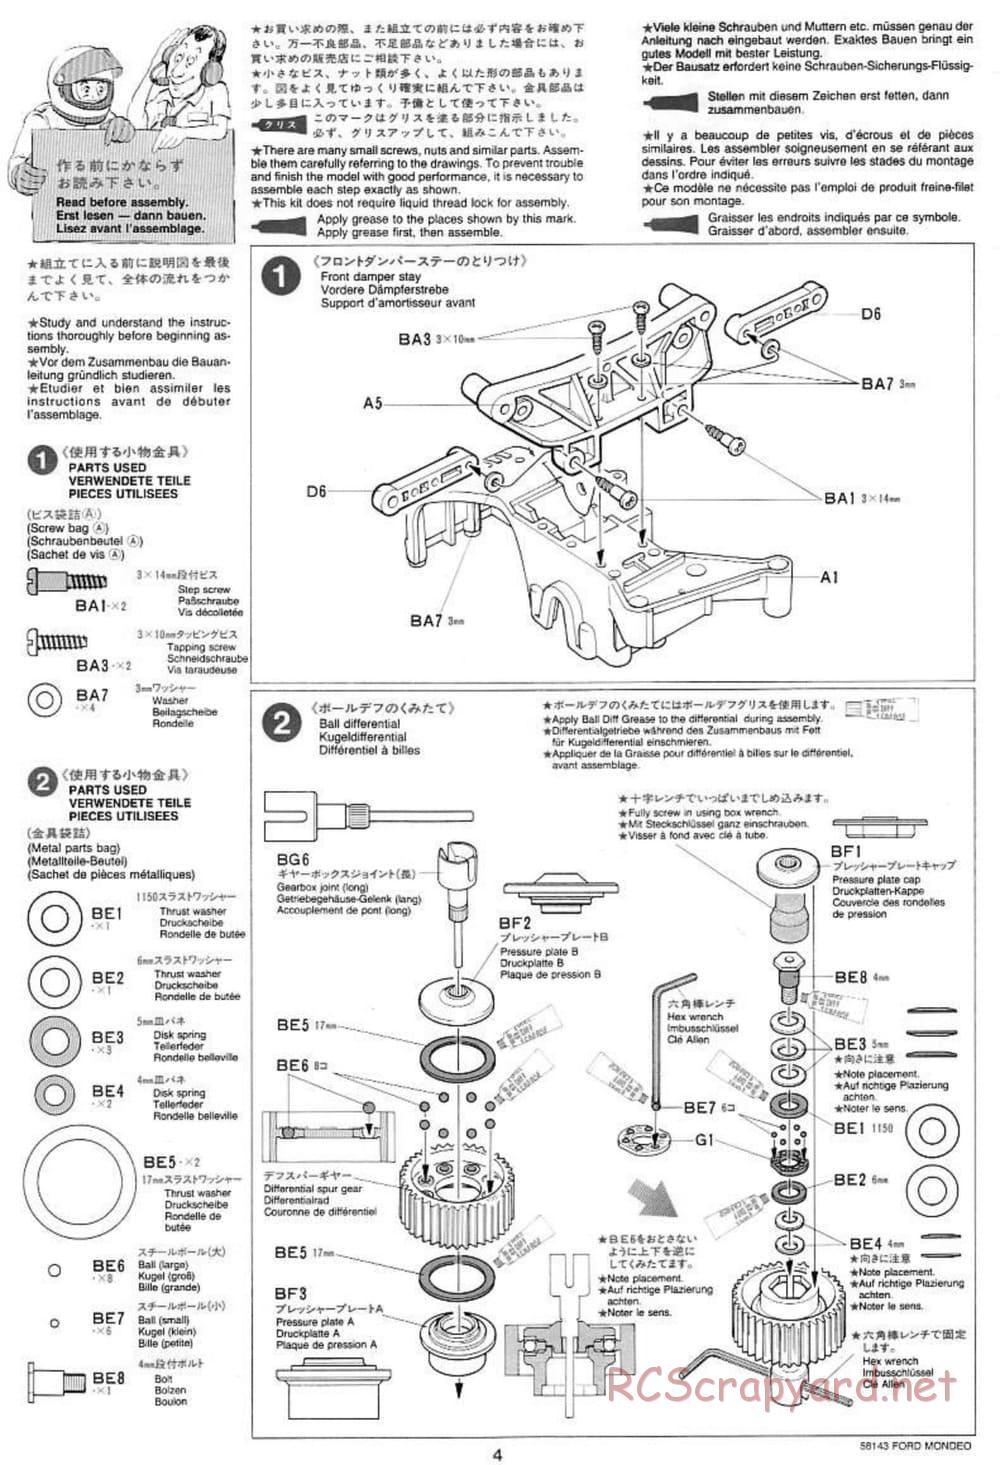 Tamiya - Ford Mondeo BTCC - FF-01 Chassis - Manual - Page 4